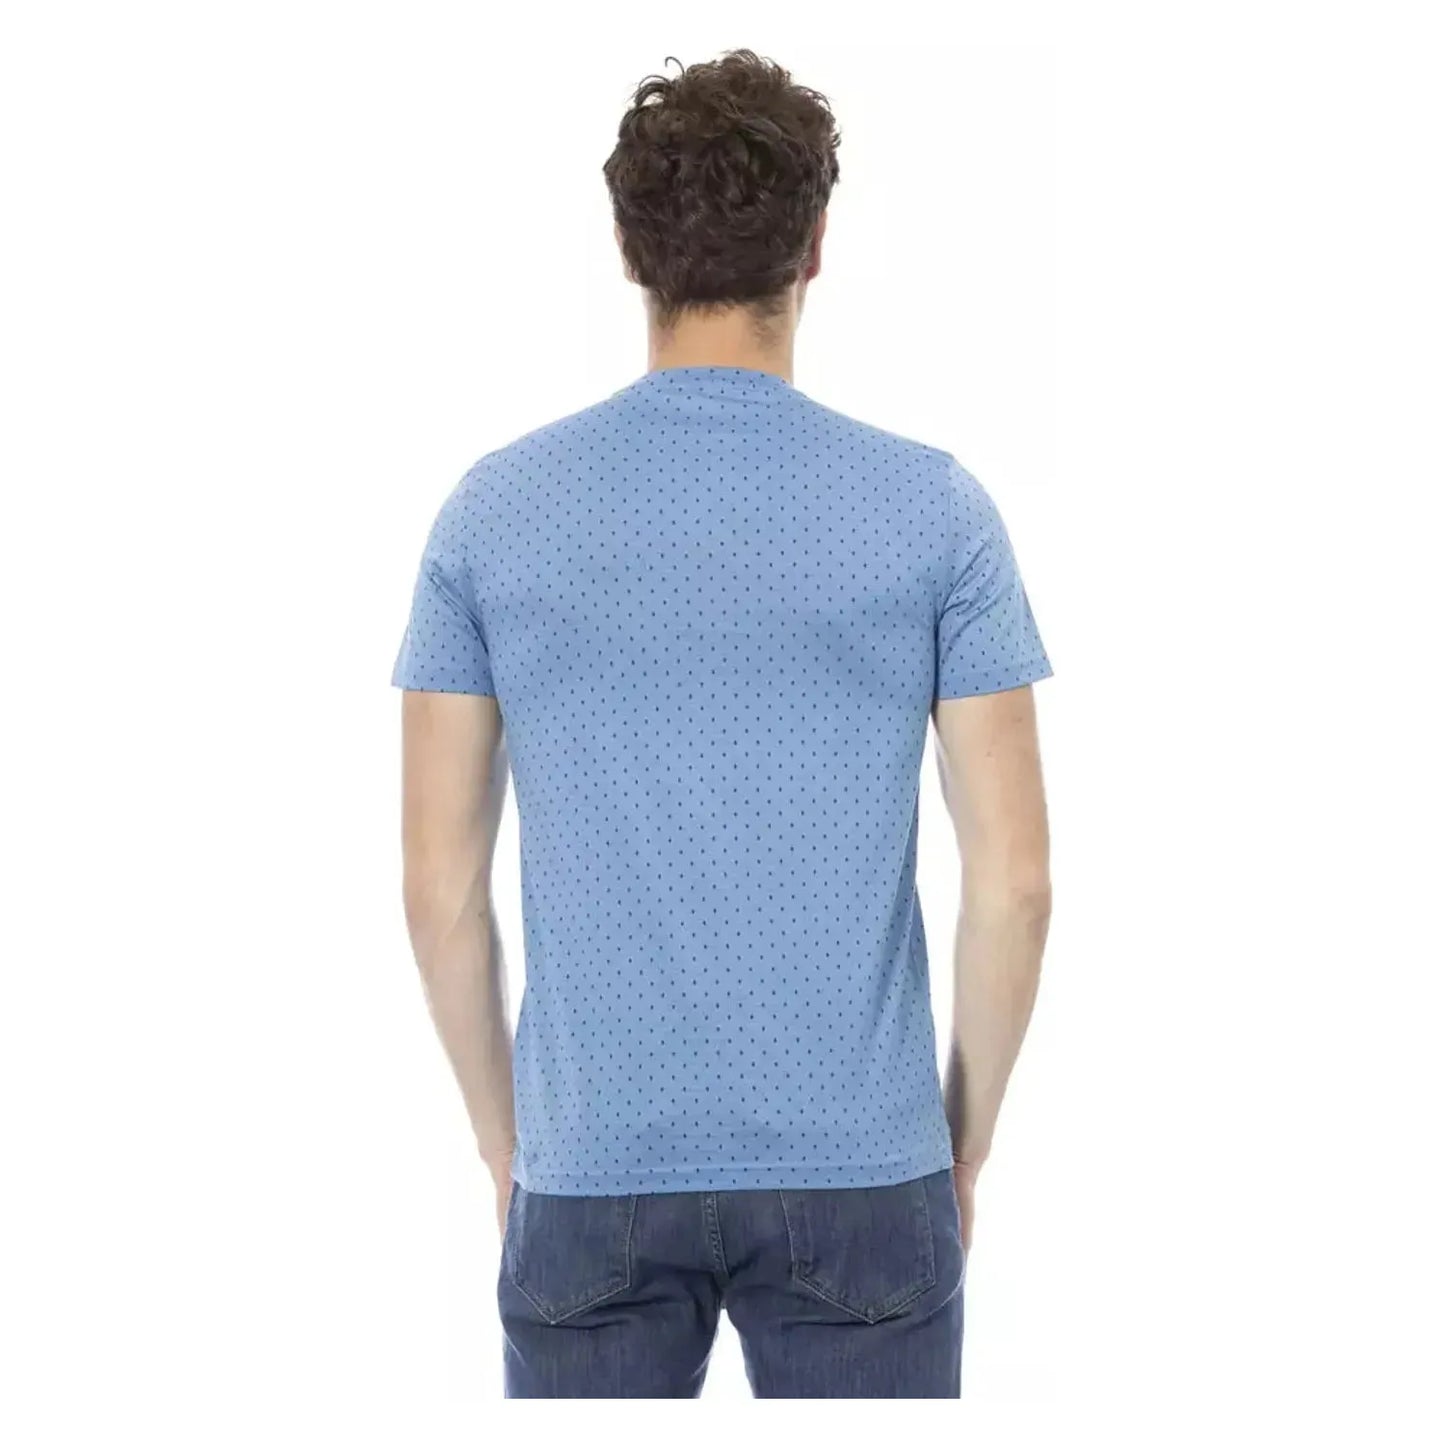 Baldinini Trend Elegant Light Blue Cotton Tee with Print light-blue-cotton-t-shirt-28